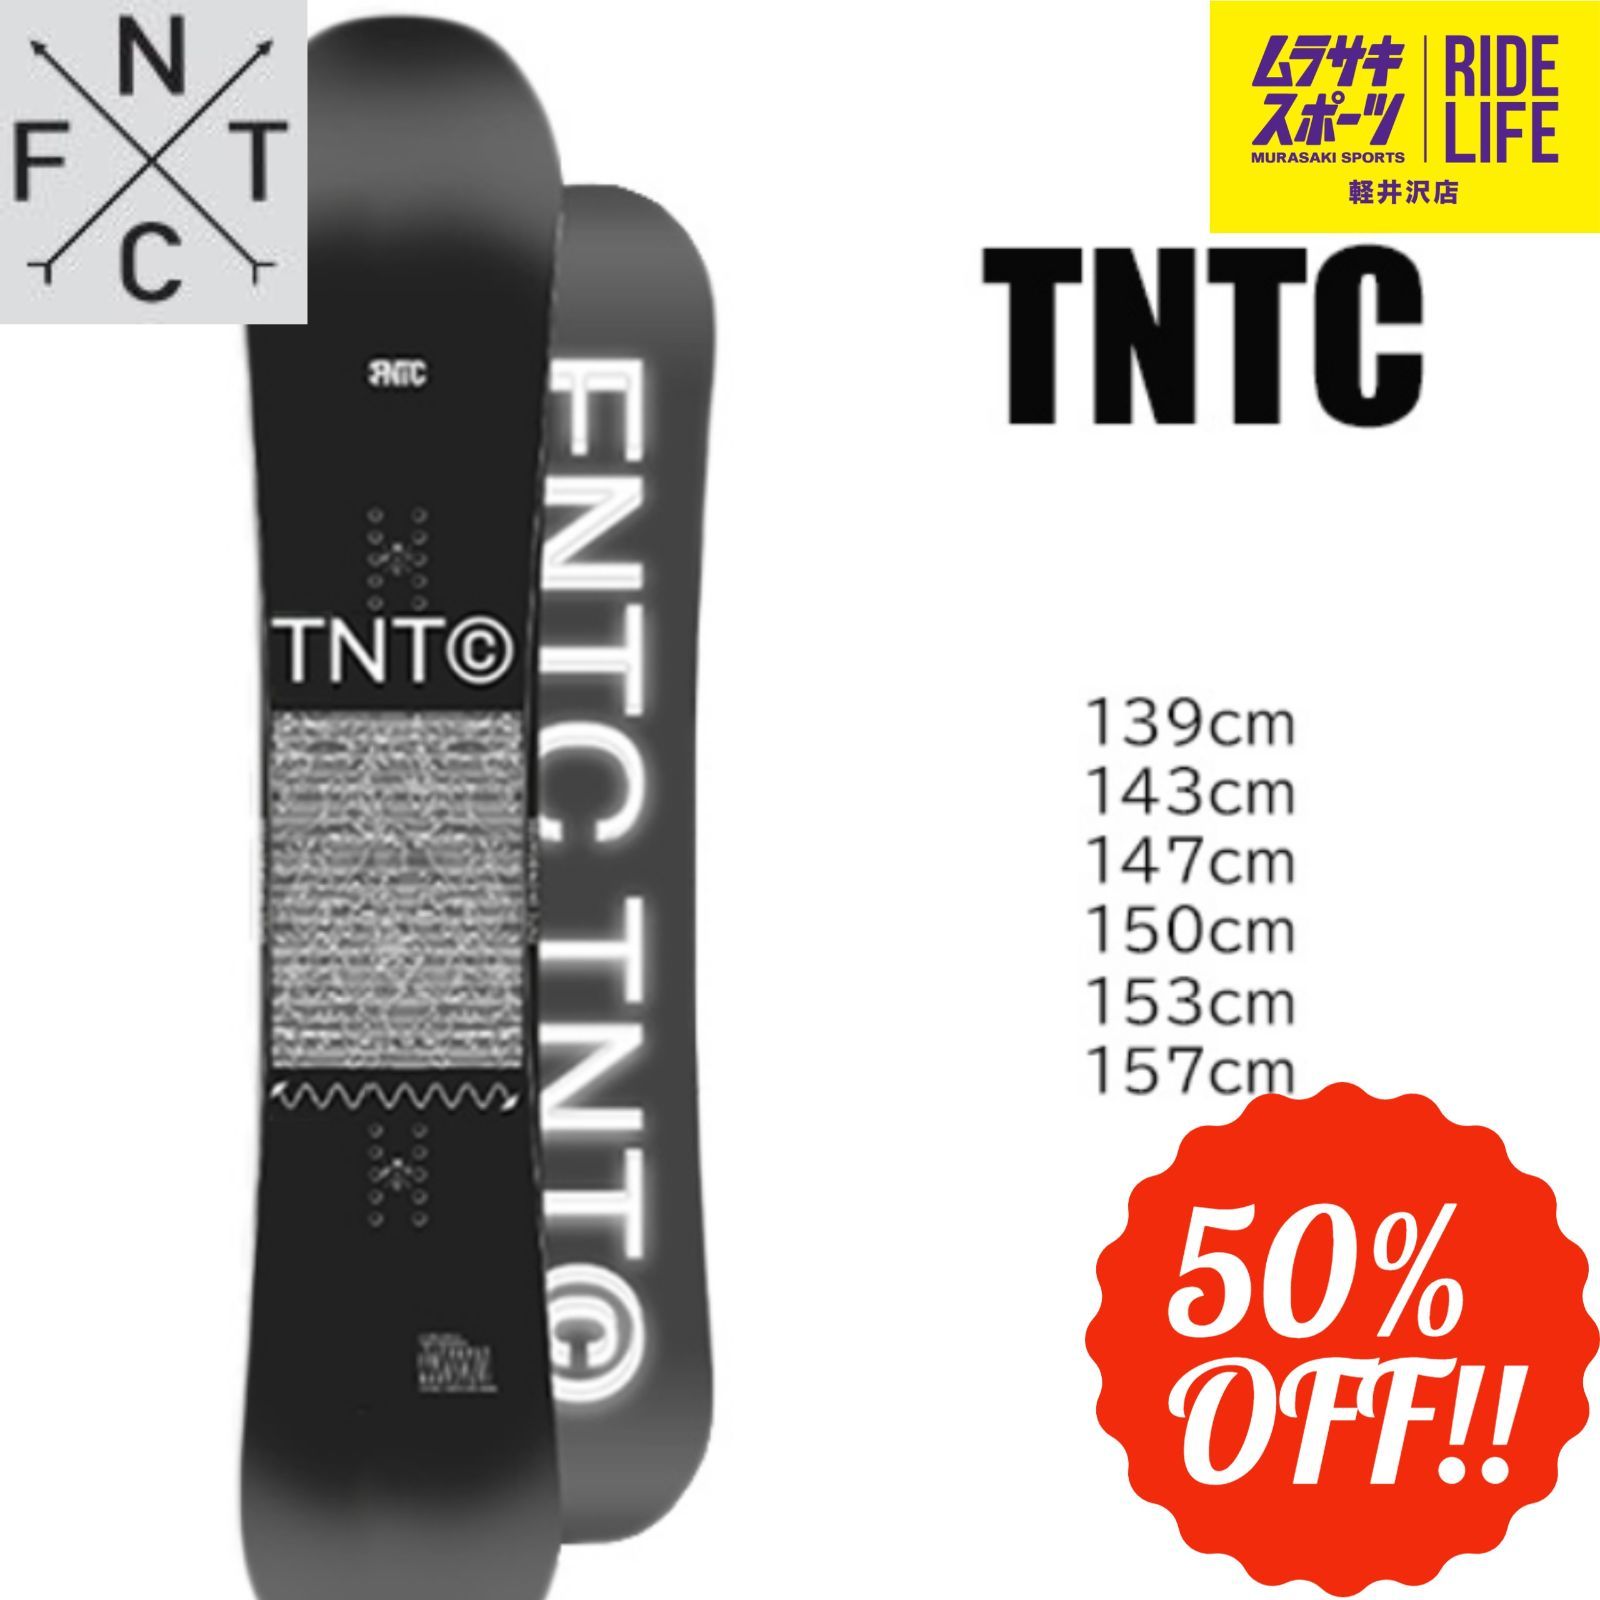 FNTC TNT 20-21 150センチ×UNION CONTACT Mサイズ - スノーボード